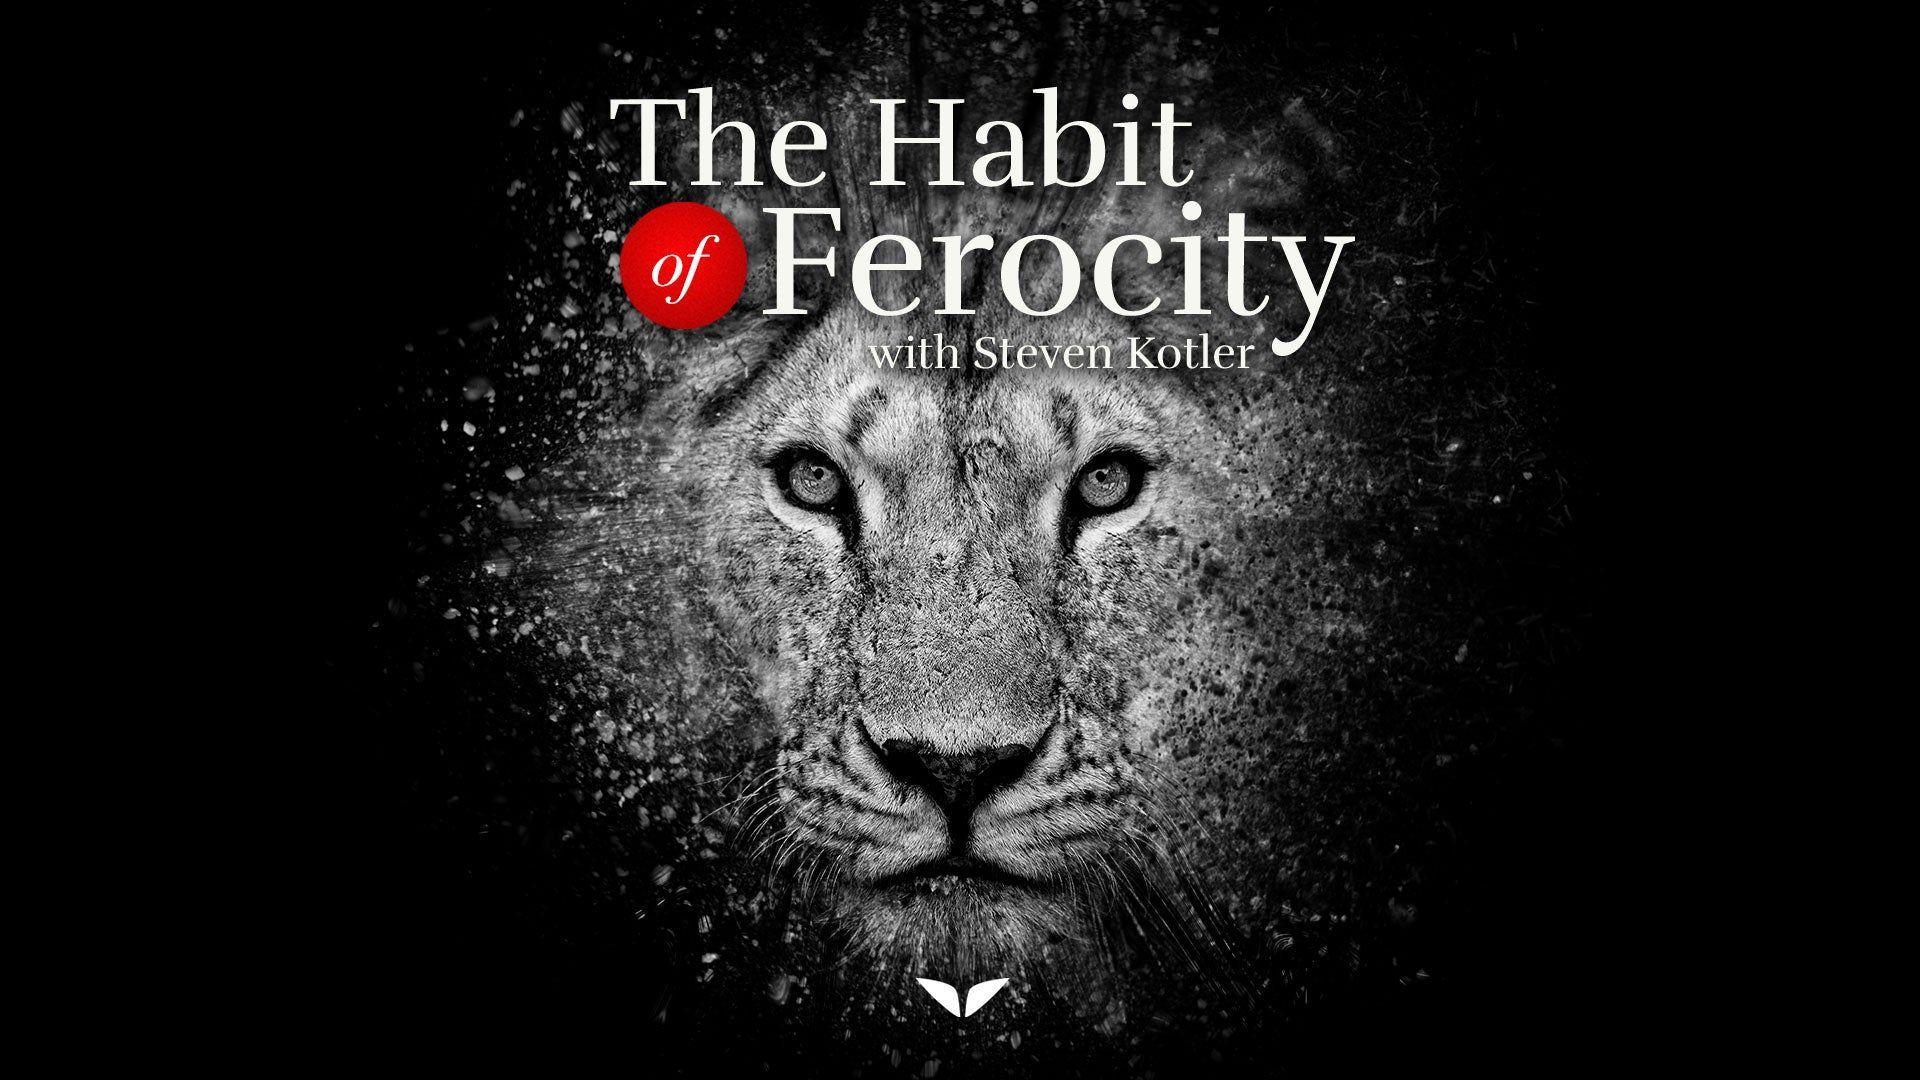 The habit of Ferocity by Steven Kotler - Course Review